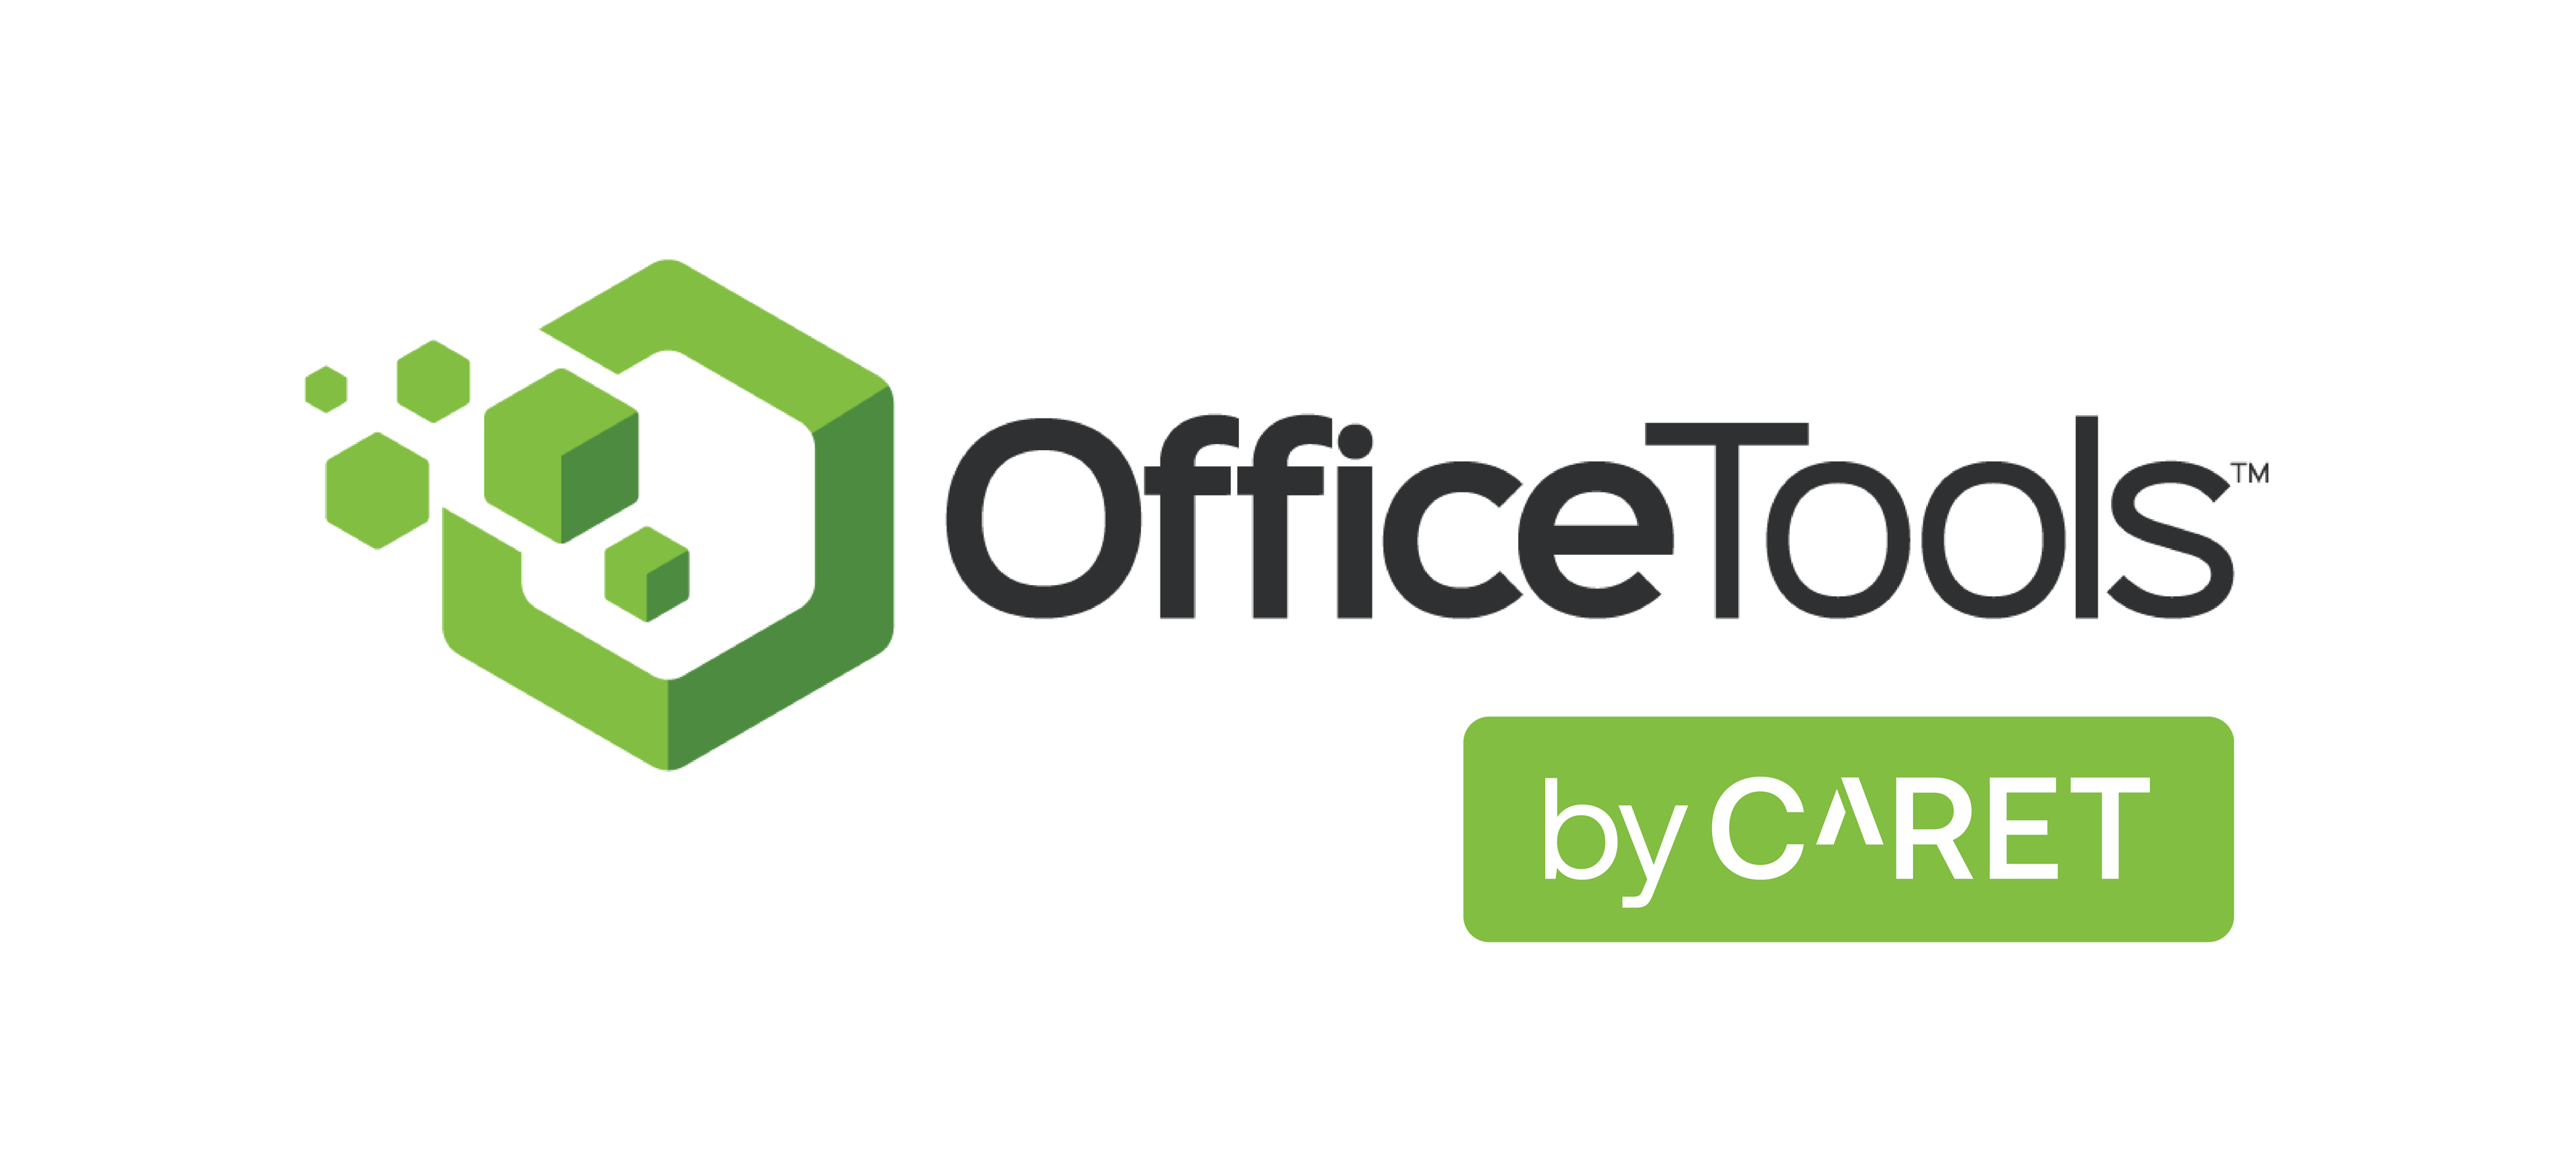 OfficeTools Logo